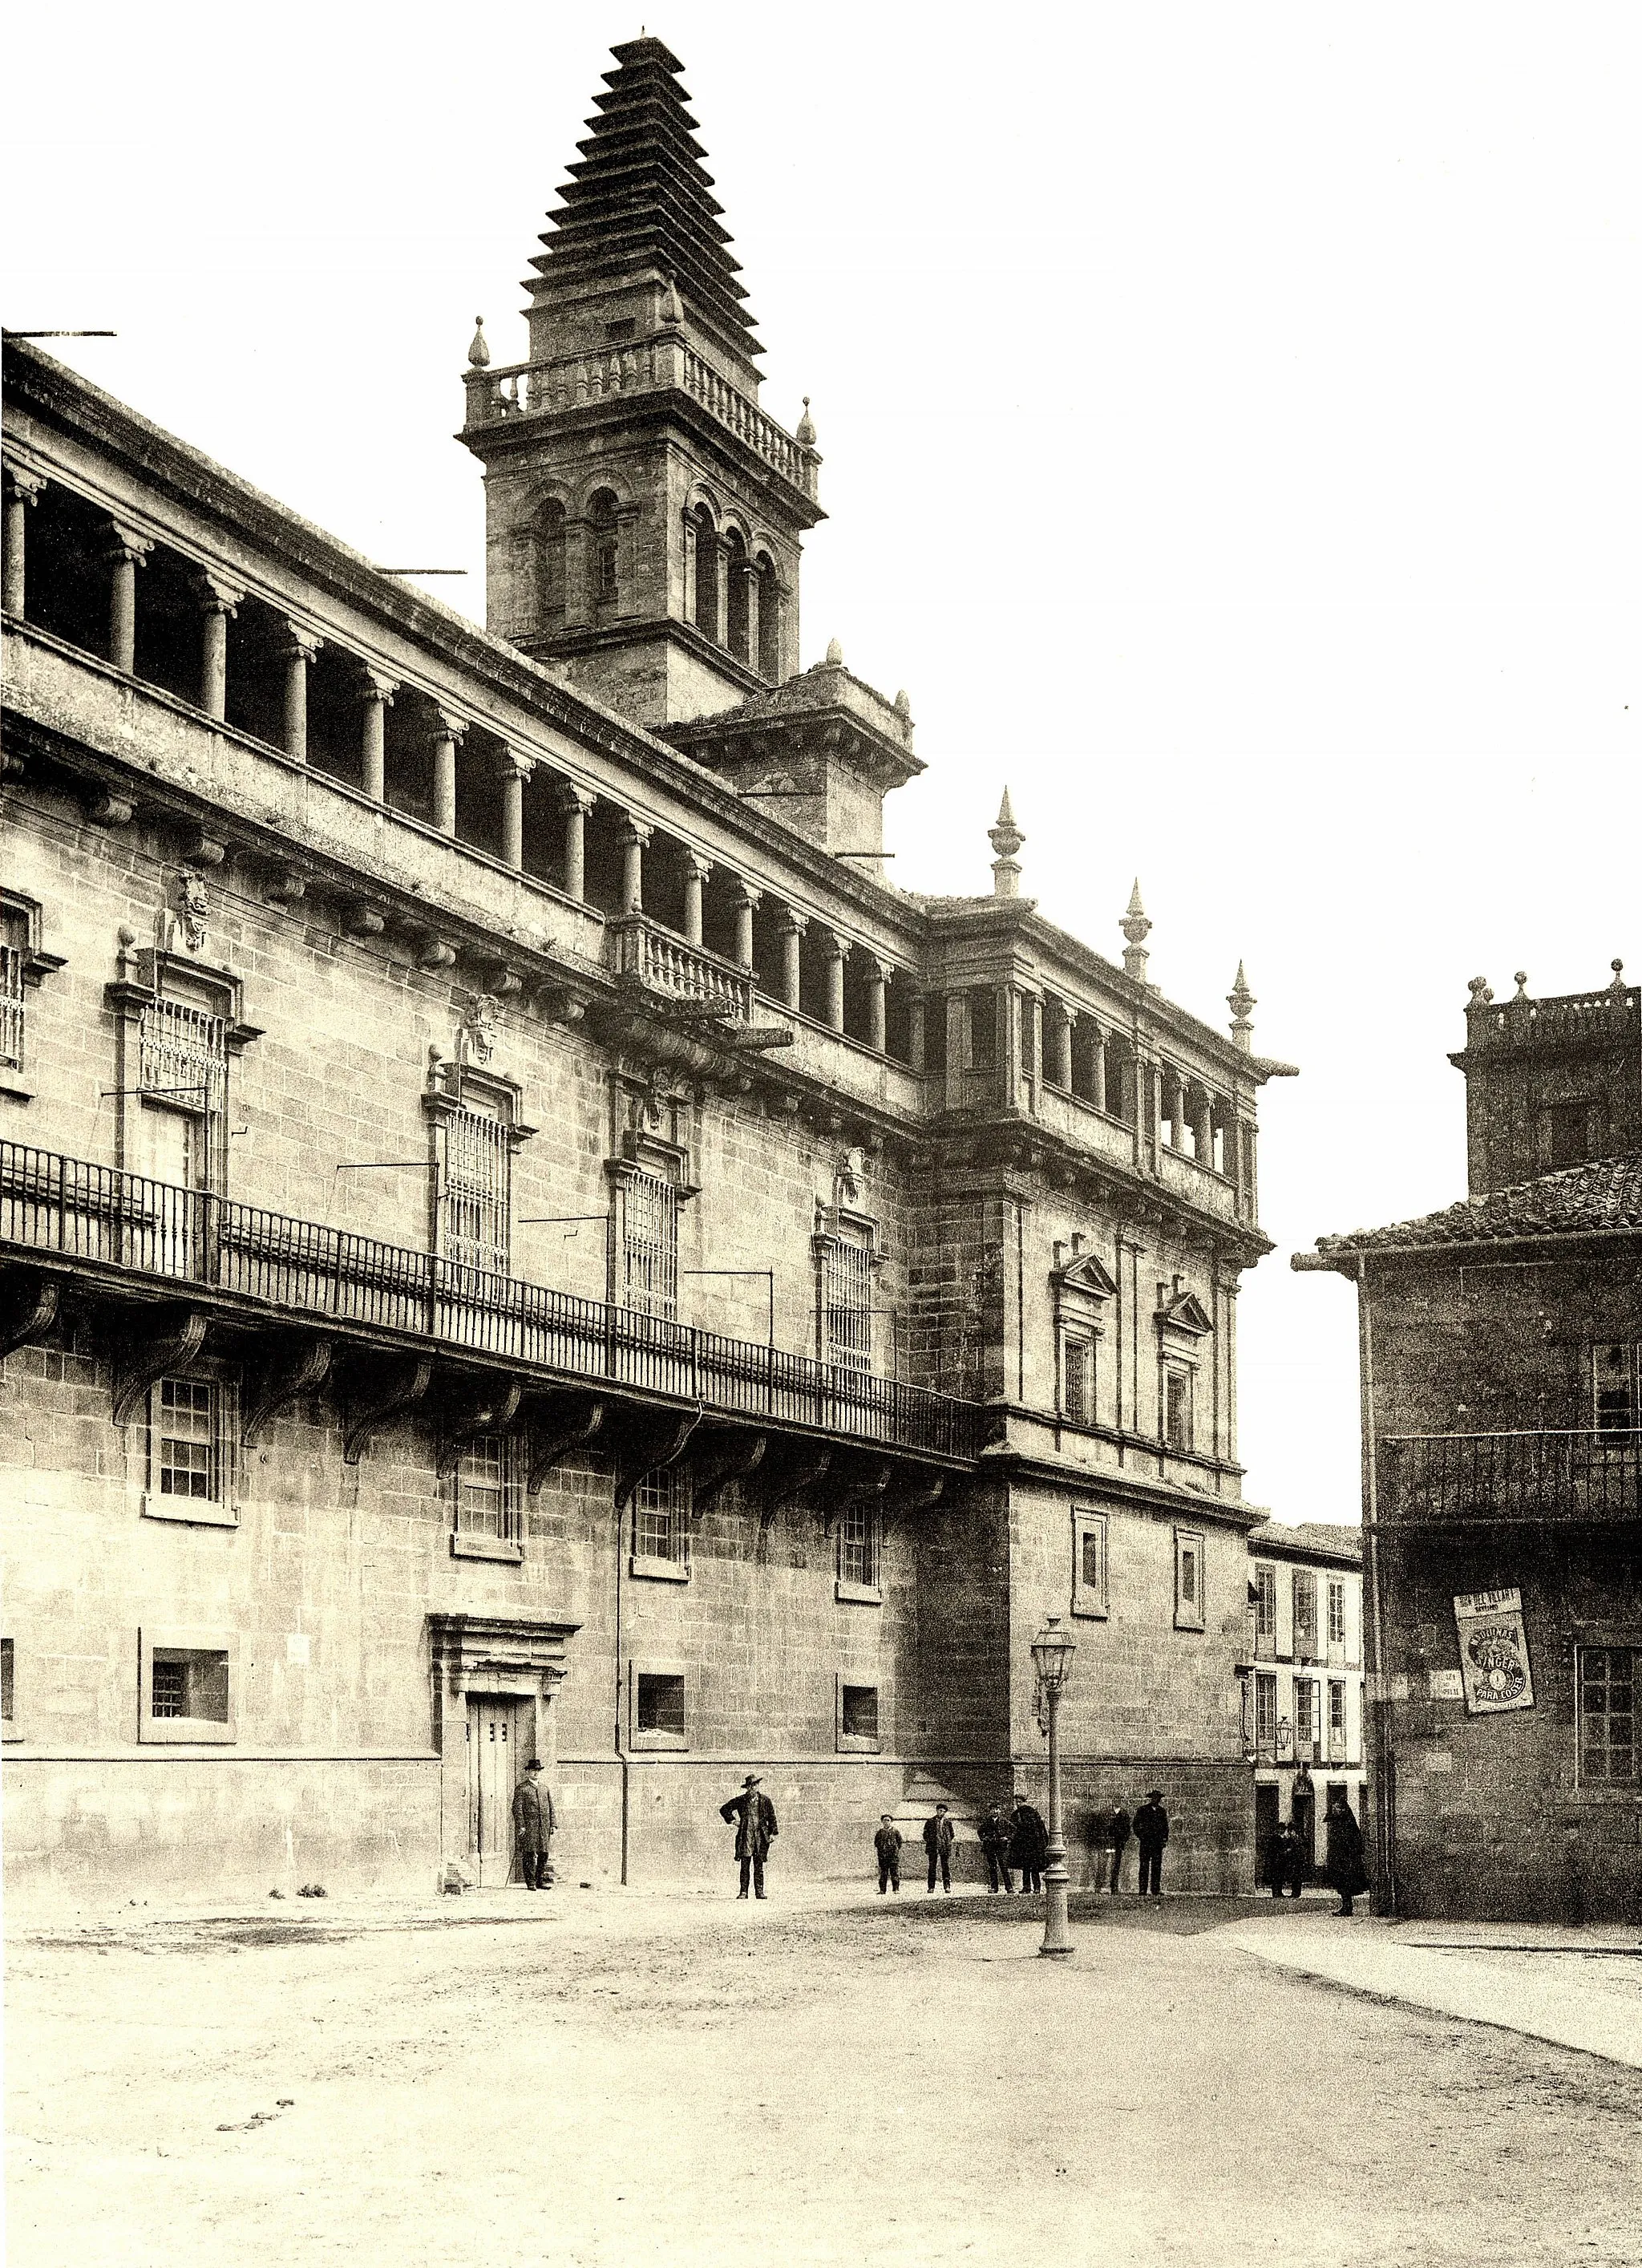 Image de Santiago de Compostela